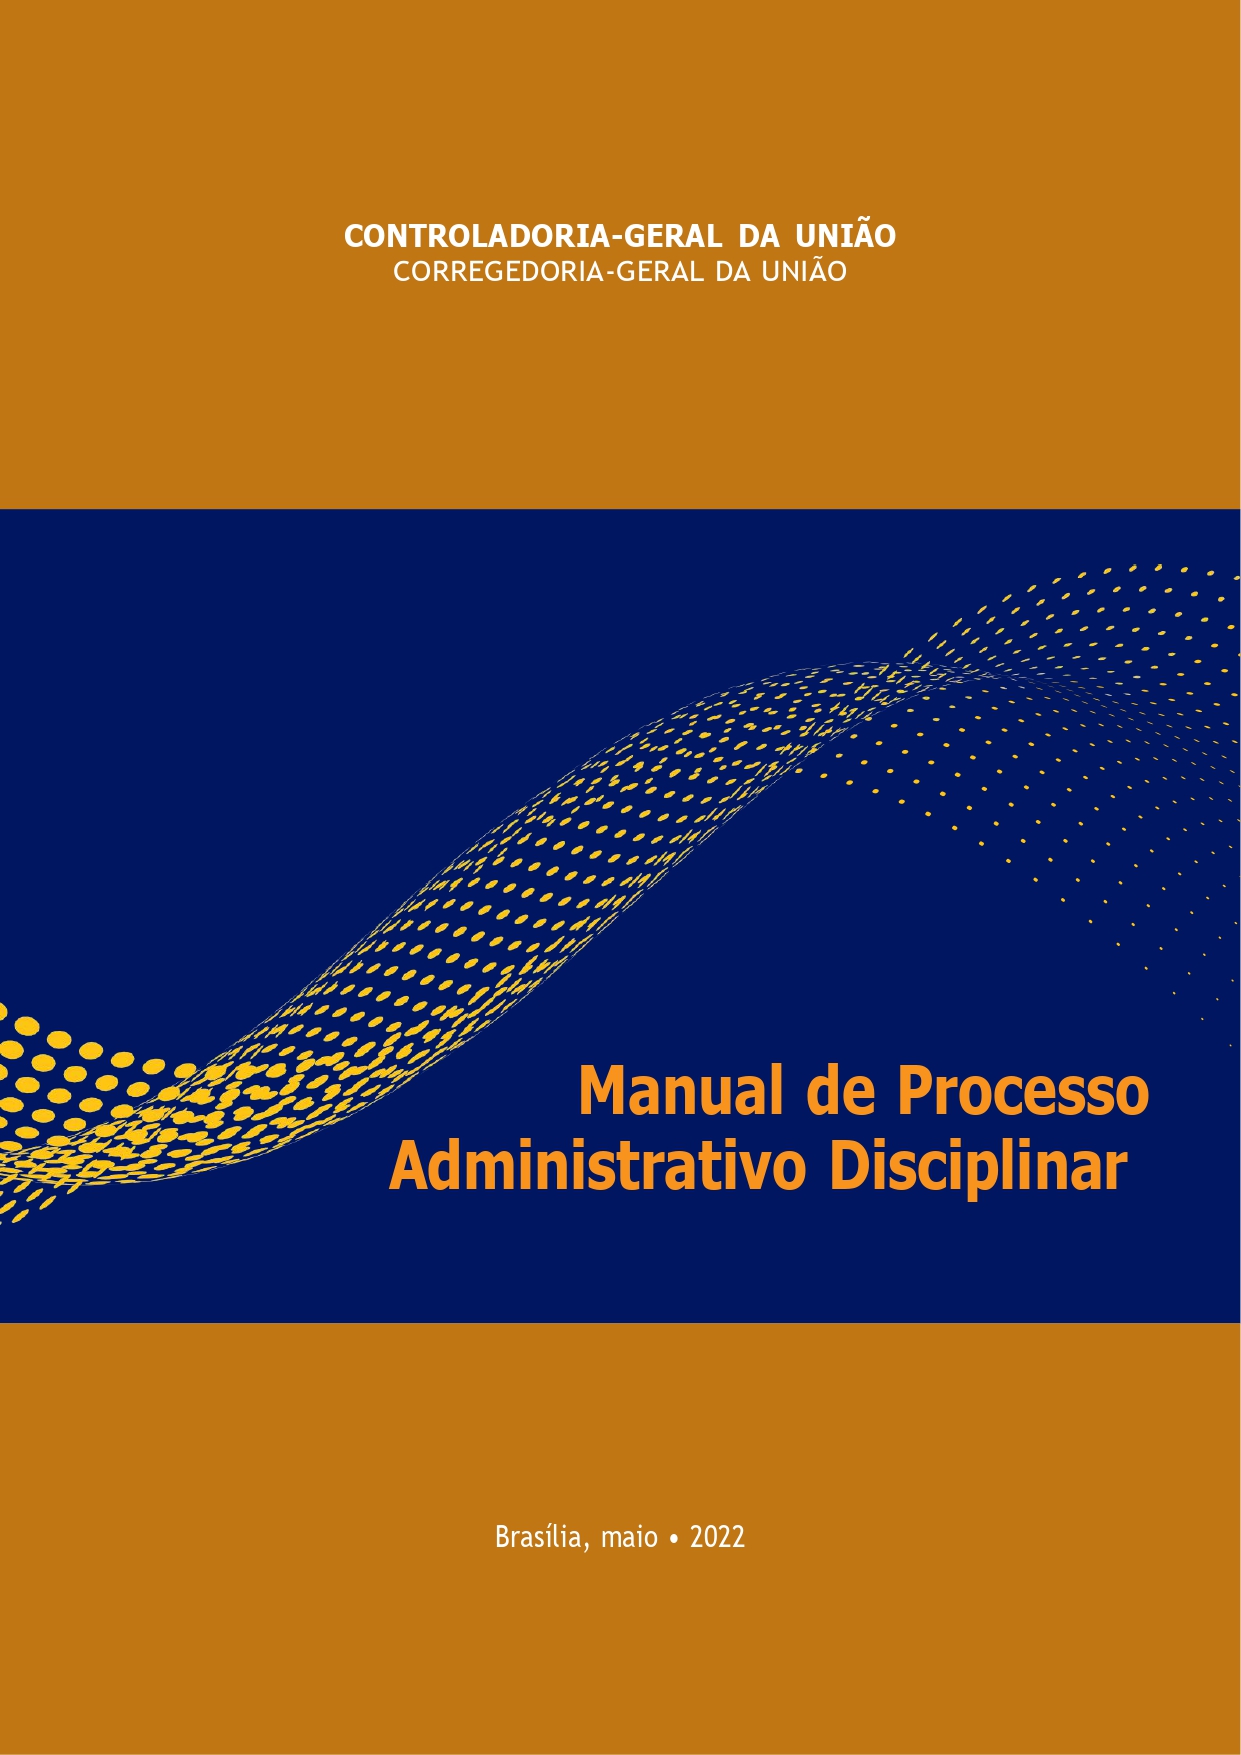 Manual de Processo Administrativo Disciplinar 2022